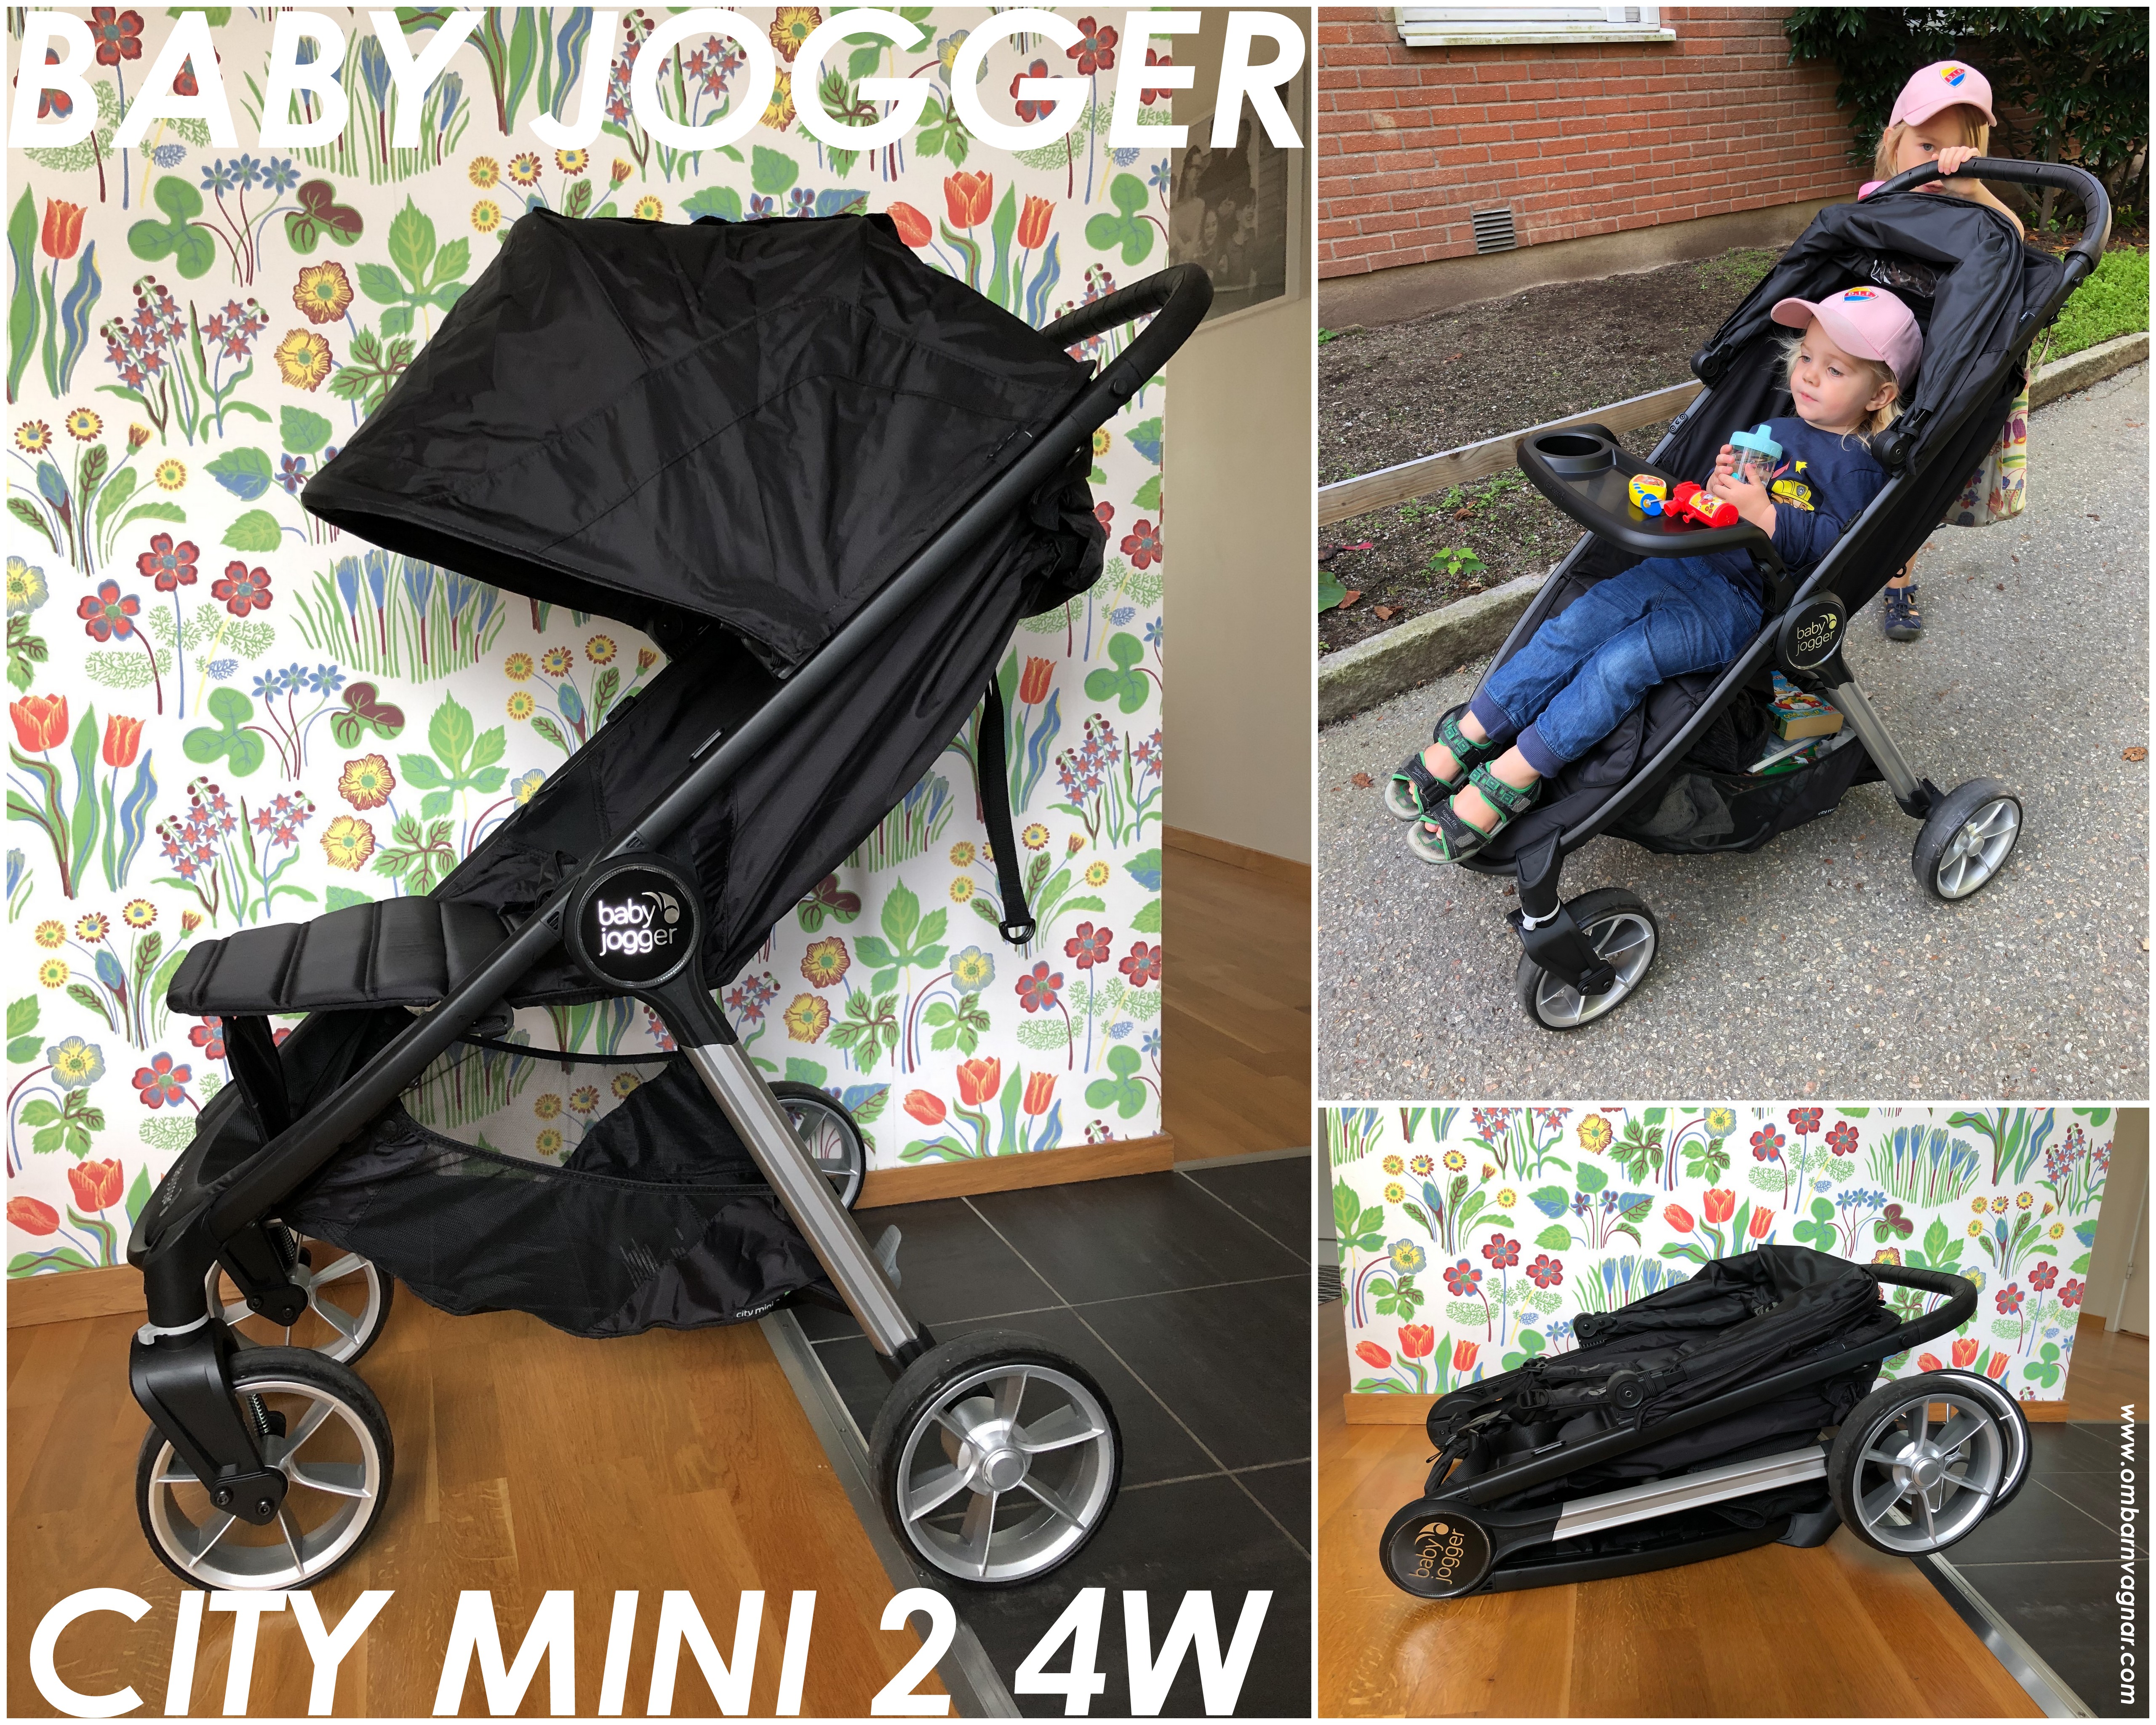 Recension av Baby Jogger City Mini 2 4W